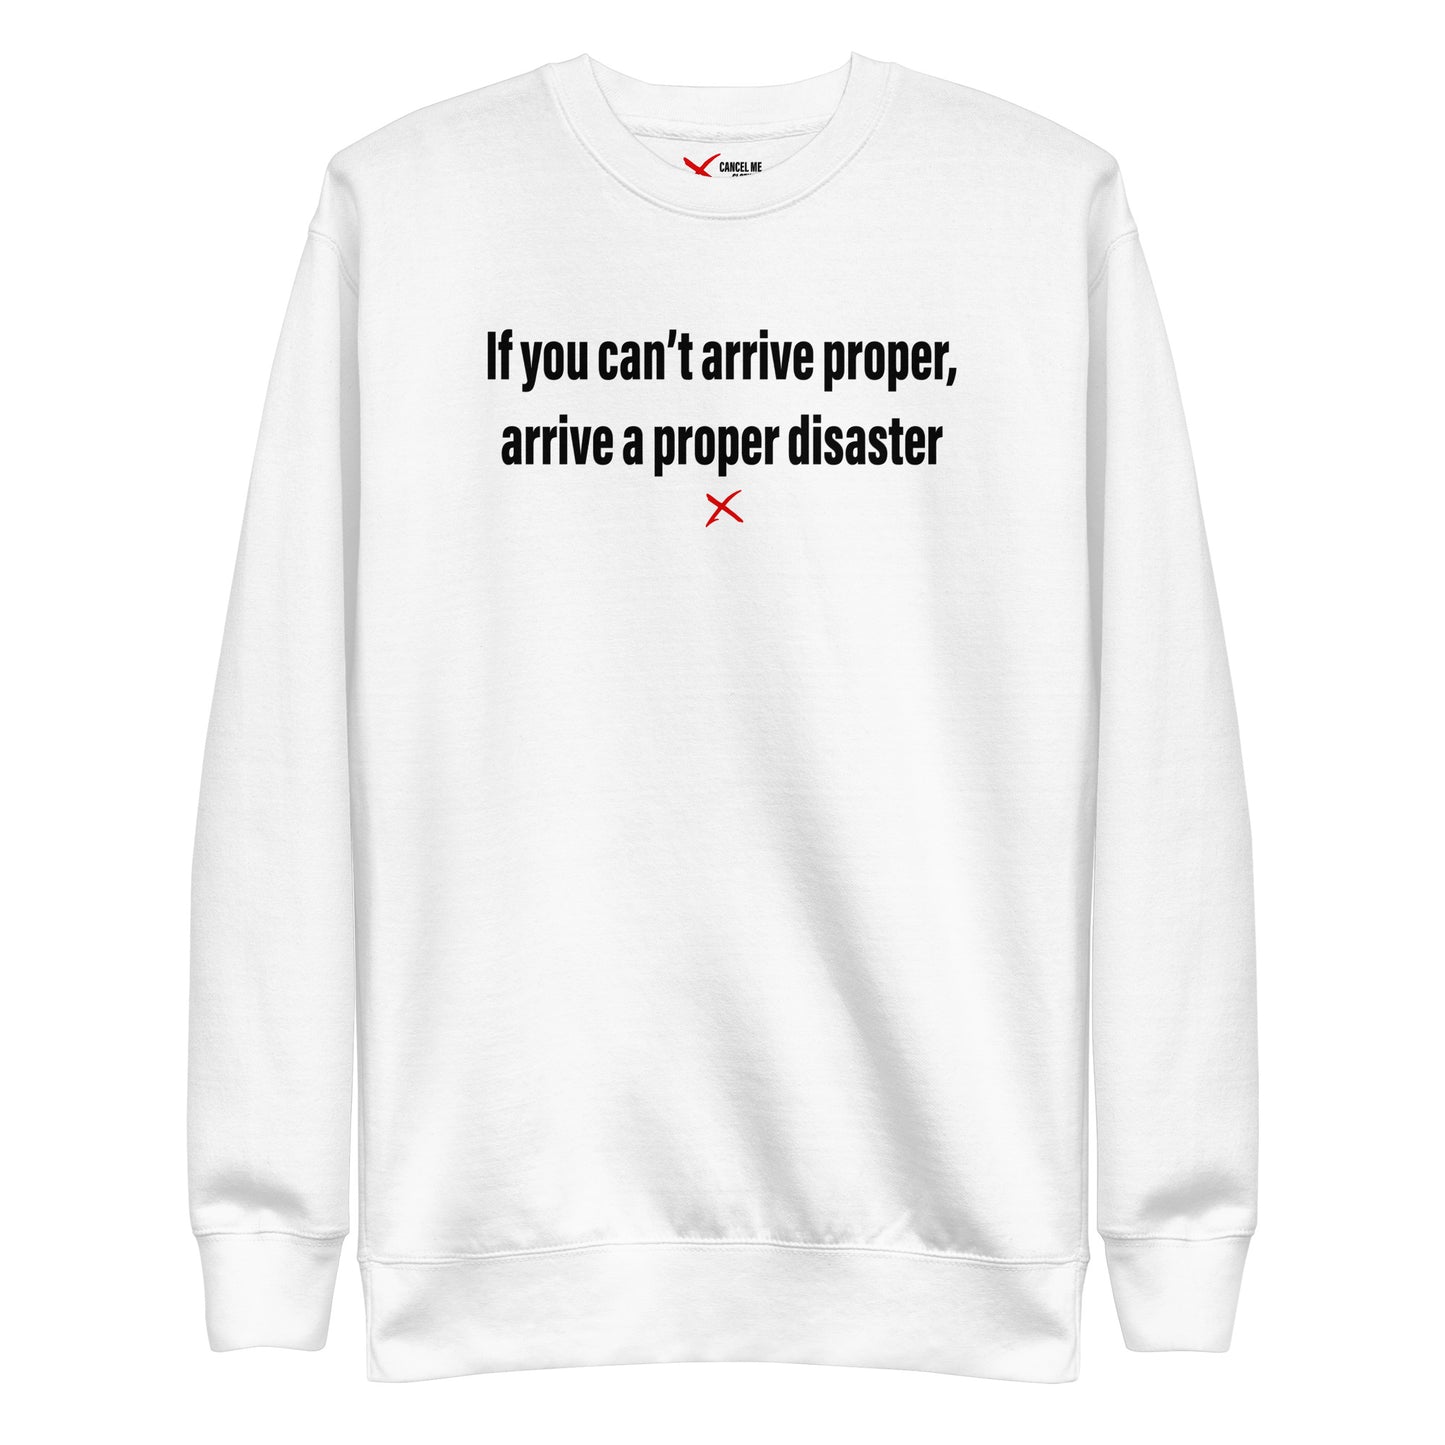 If you can't arrive proper, arrive a proper disaster - Sweatshirt